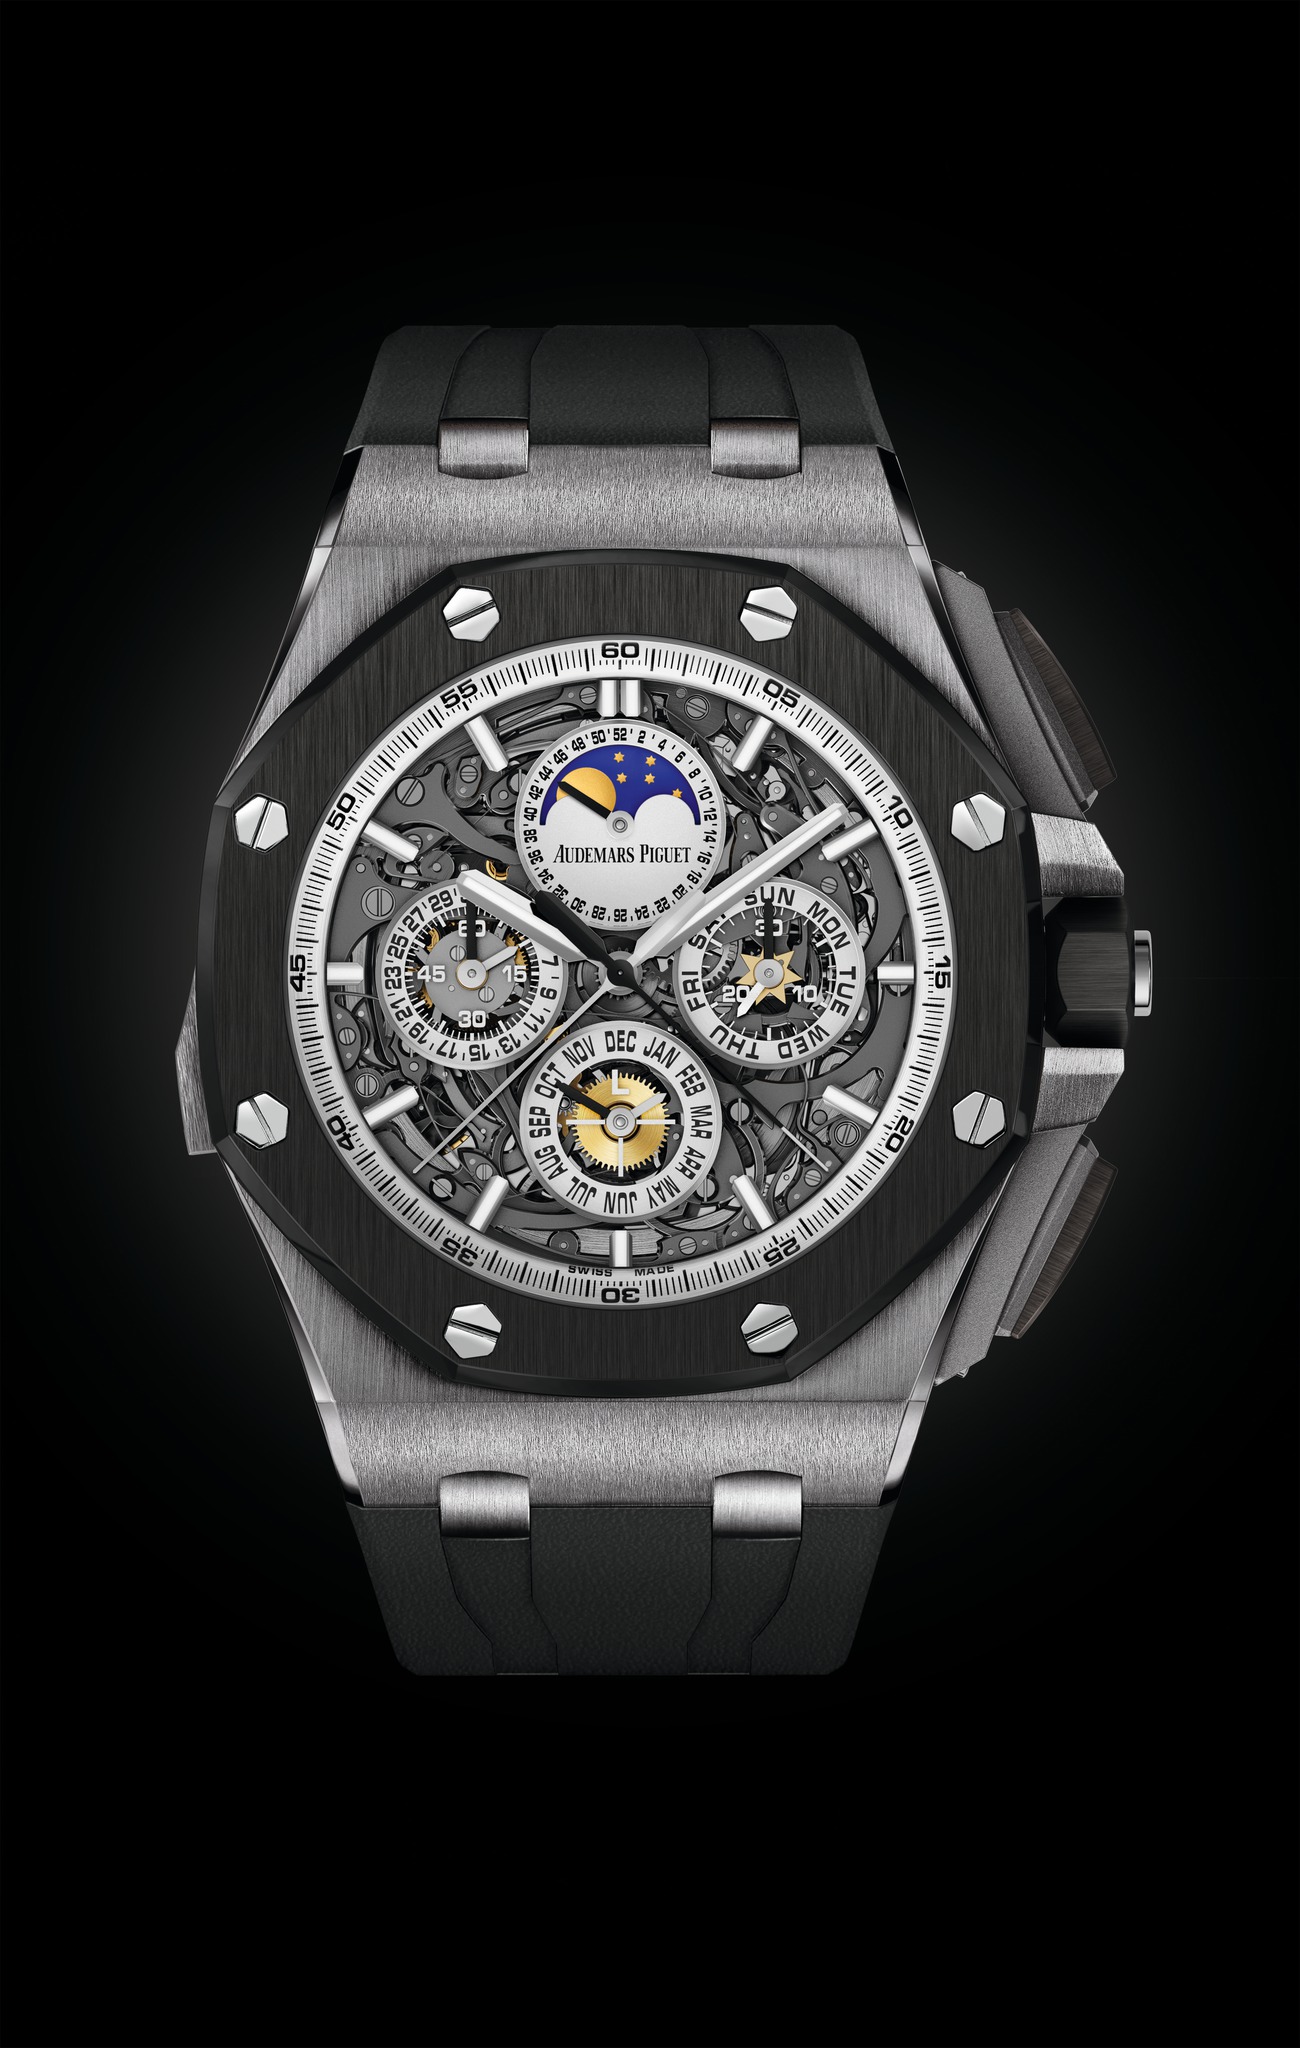 Audemars Piguet Royal Oak Offshore Grande Complication Titanium watch REF: 26571IO.OO.A010CA.01